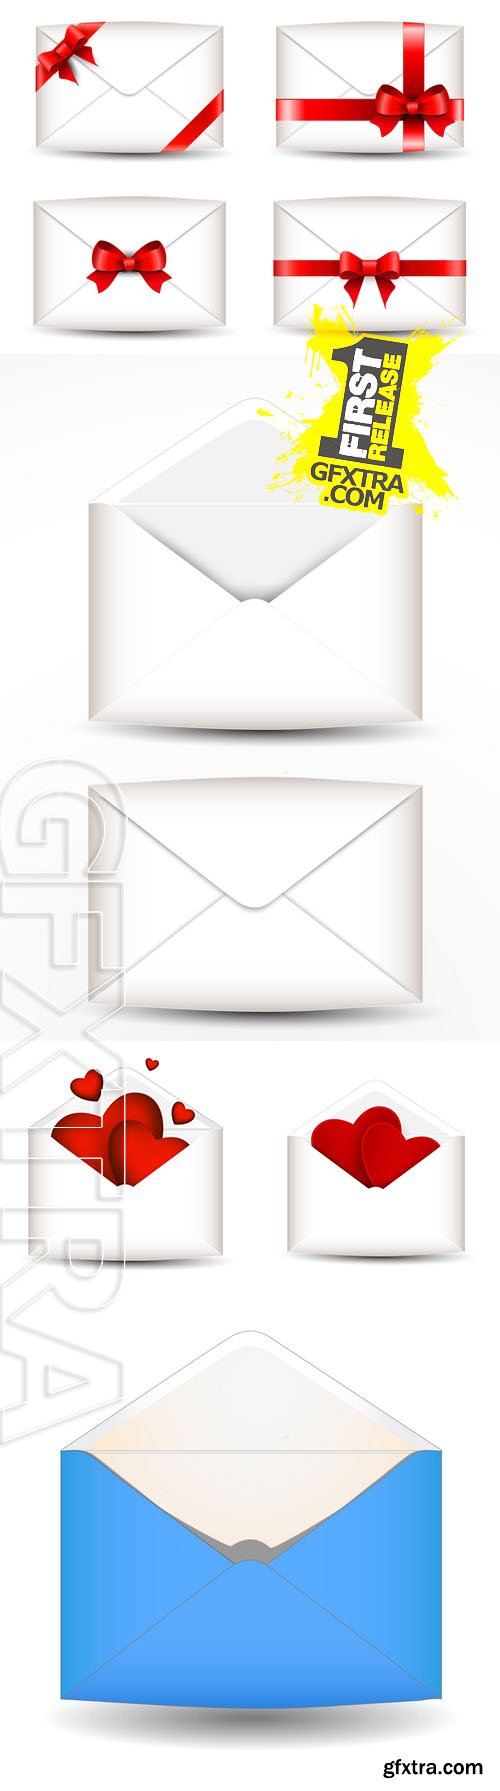 Vector - Mail Envelope